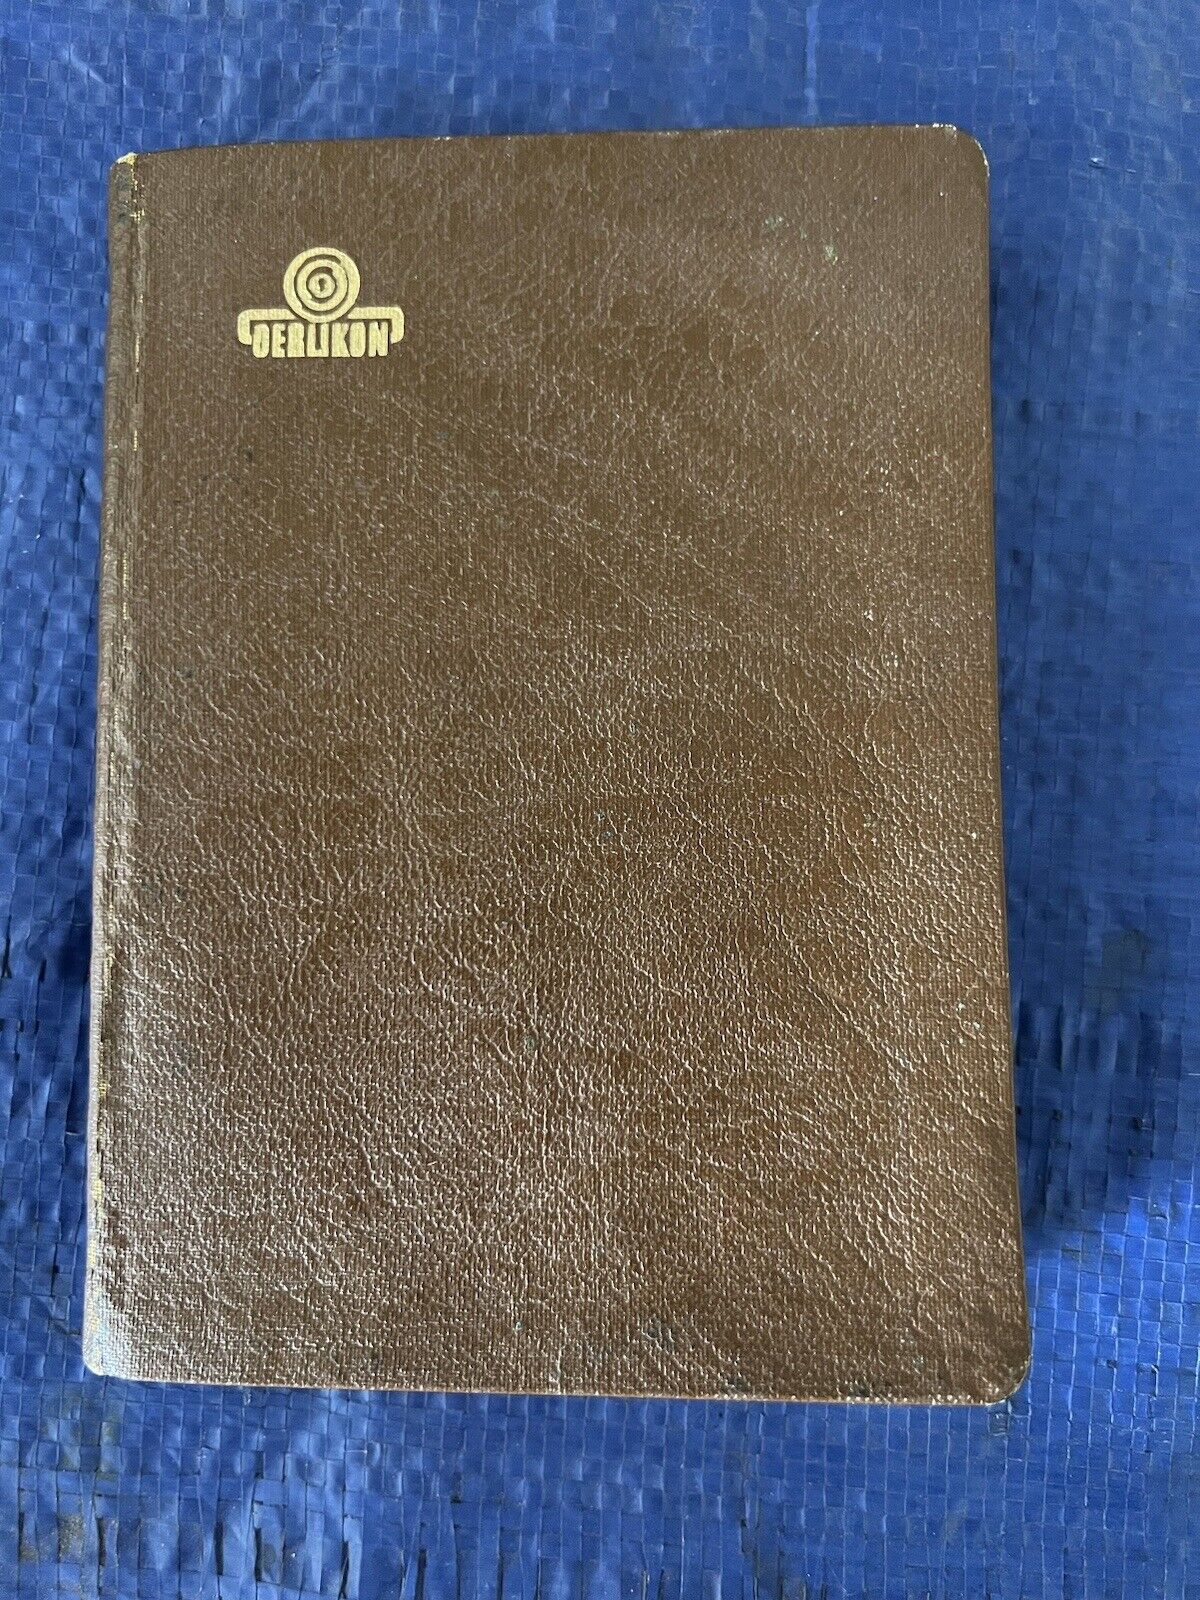 1958 Oerlikon Anti-Aircraft Gun Pocket Book